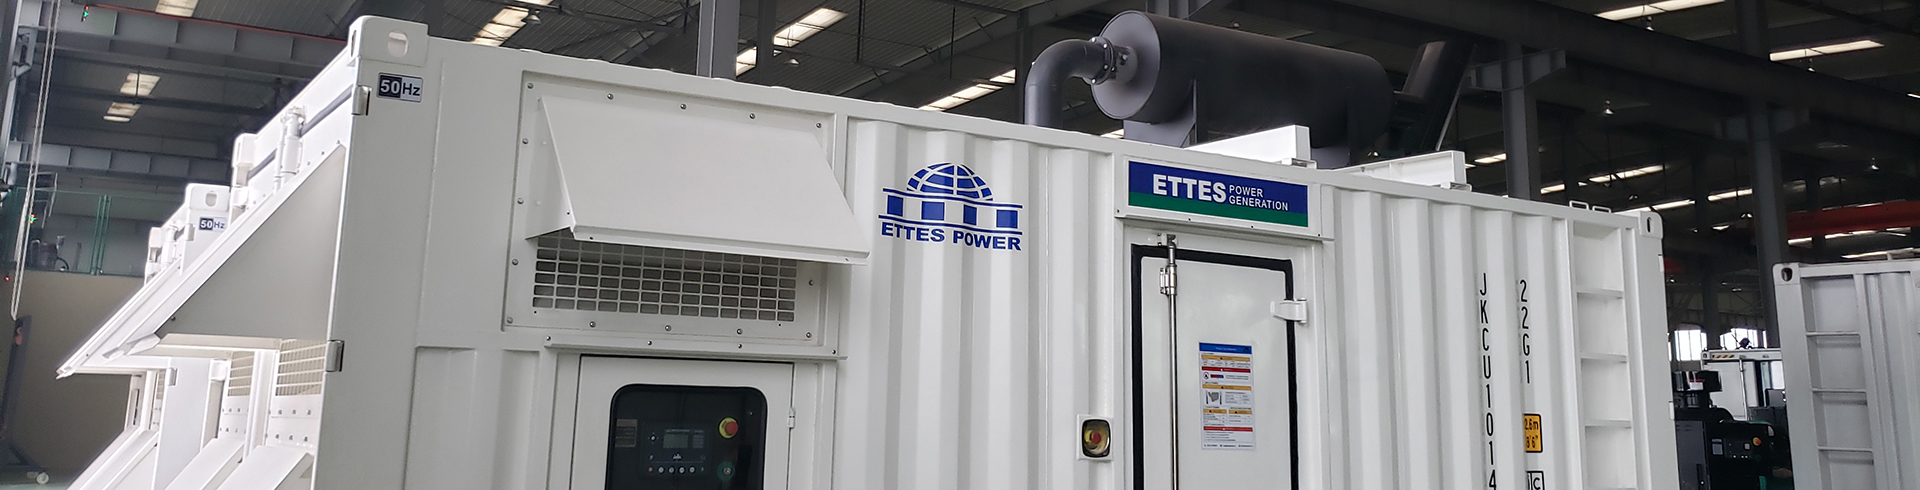 Ettespower manufature producer gas engine generators & CHPs Ettes Power Group Cummins MAN MWM (17)